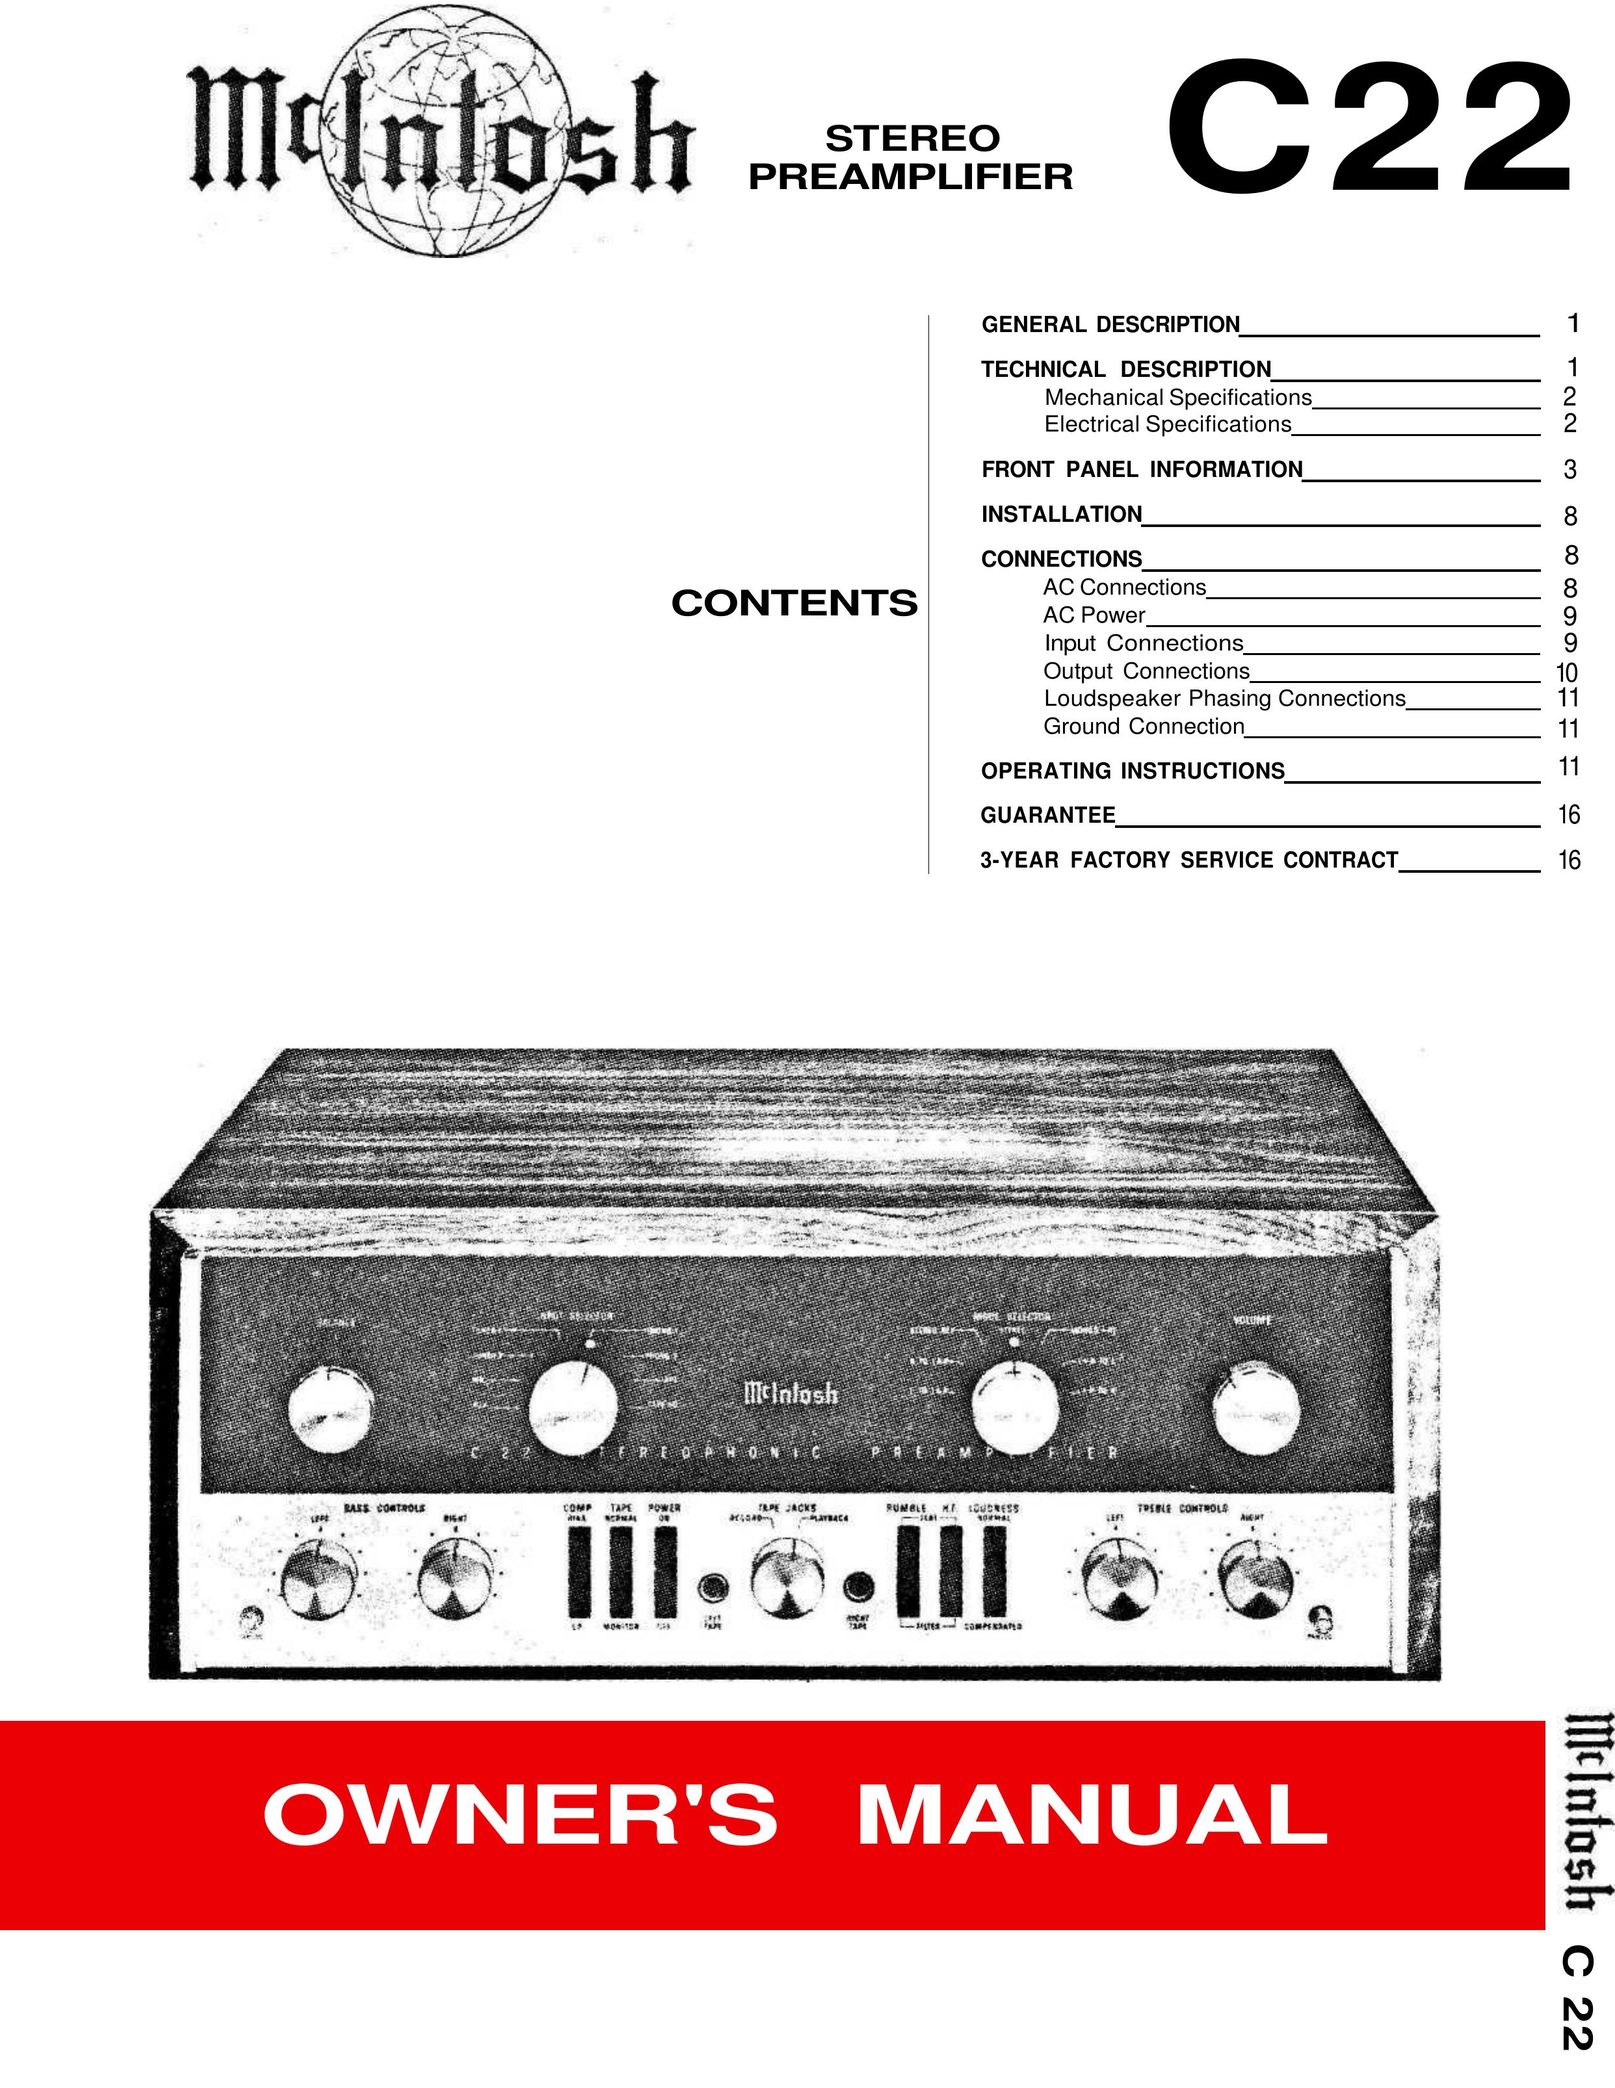 McIntosh c22 Stereo Amplifier User Manual